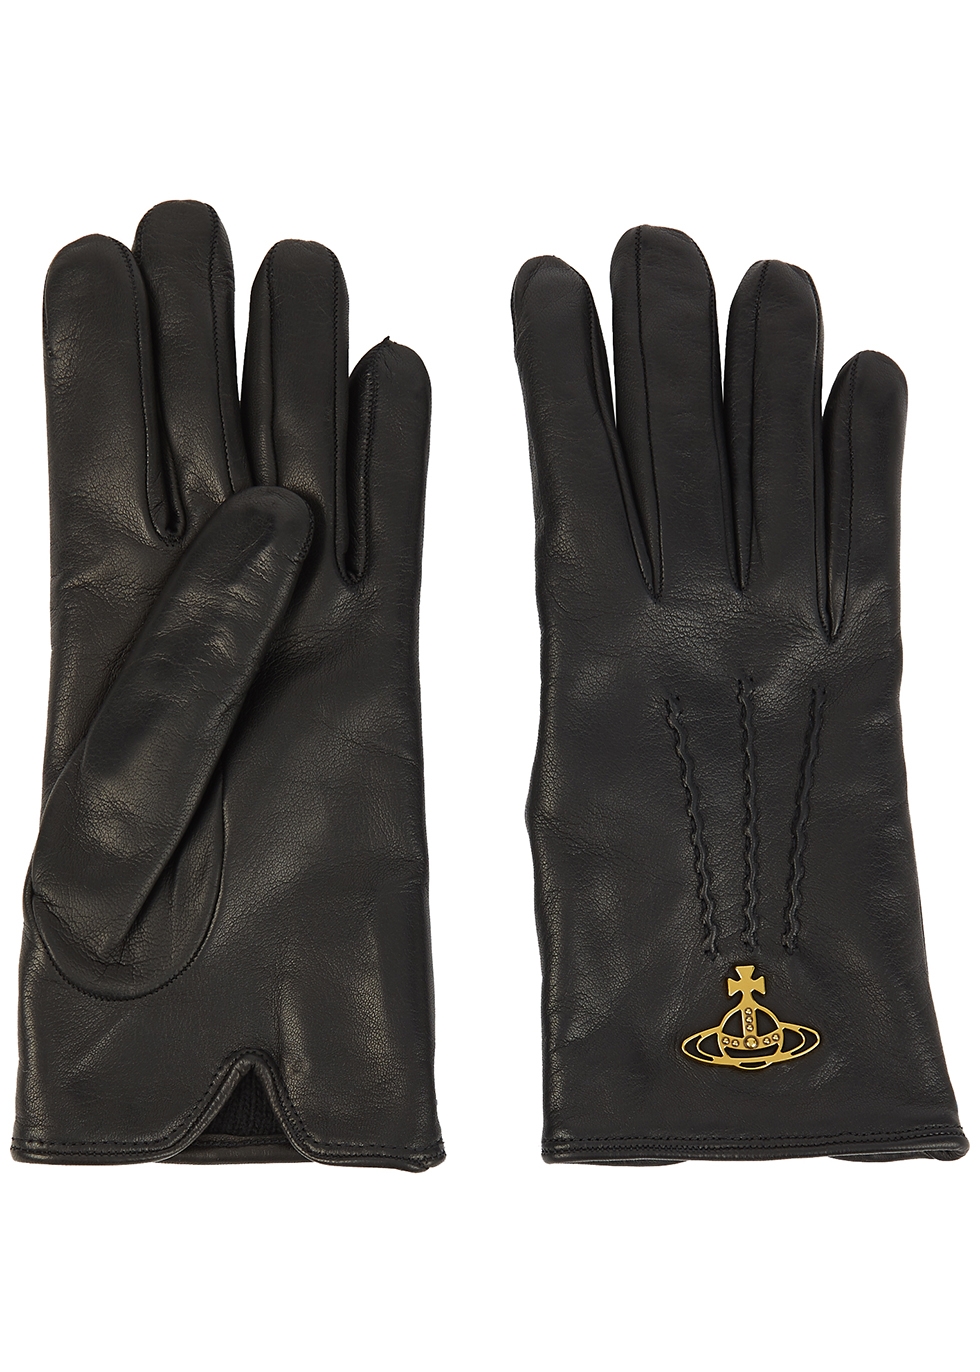 Vivienne Westwood Orb black leather gloves